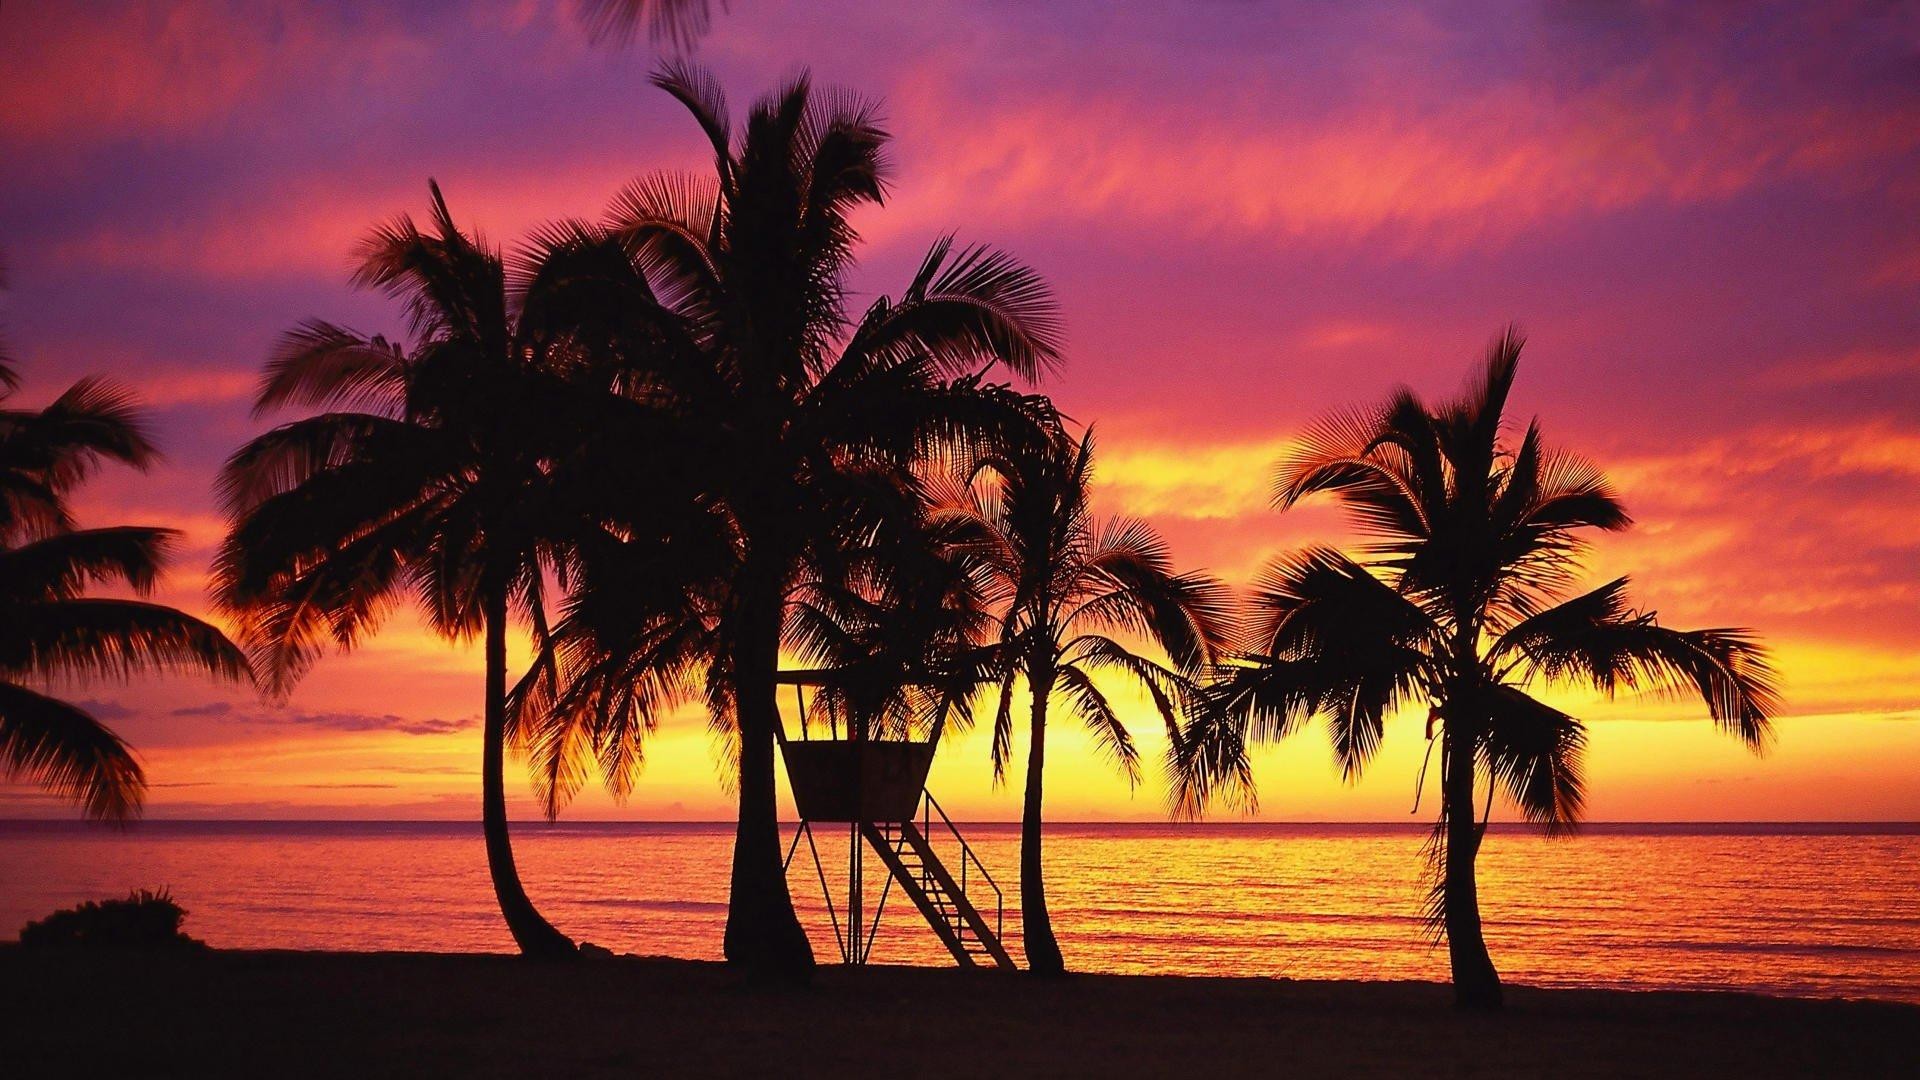 1920x1080 Wallpaper-hawaii-image-sunset-fresh-images-nature